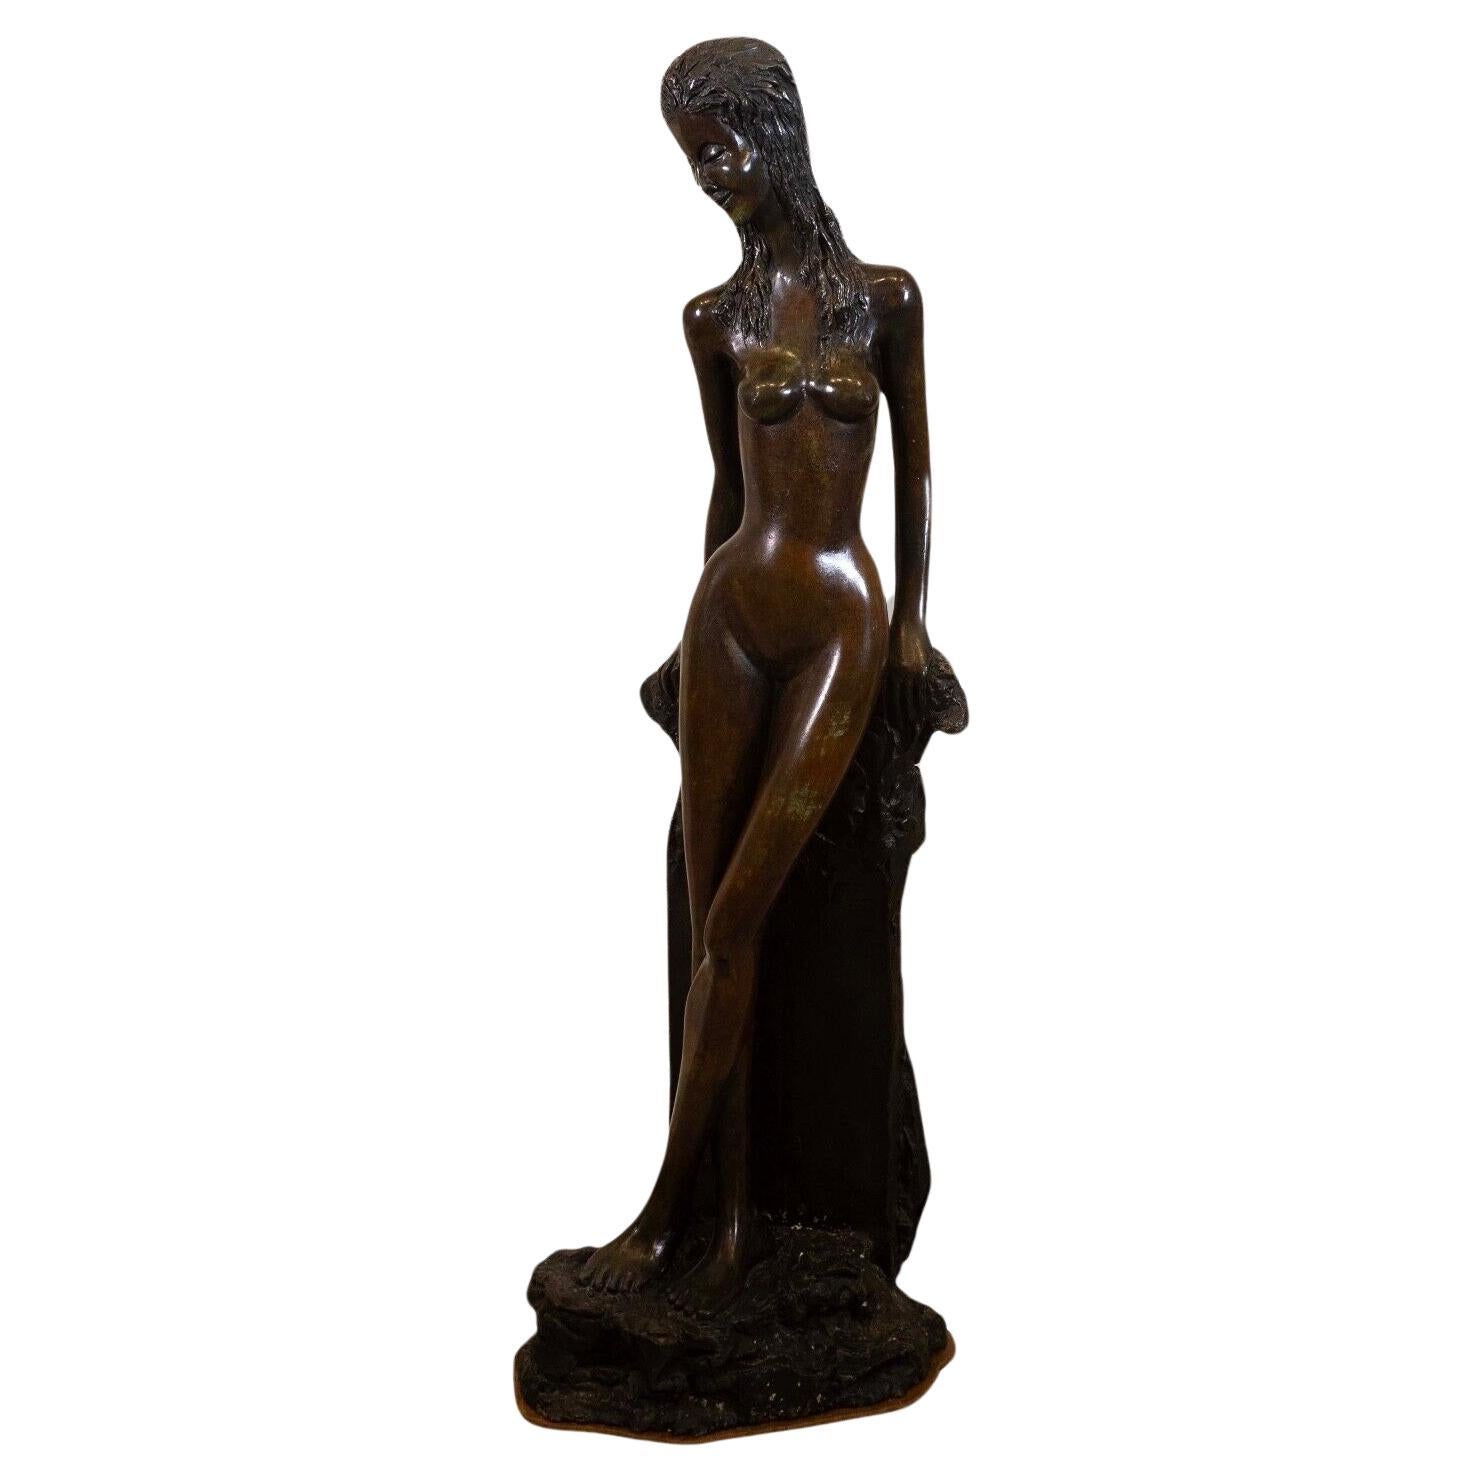 Sculpture figurative de nu féminin moderne Art Déco en bronze